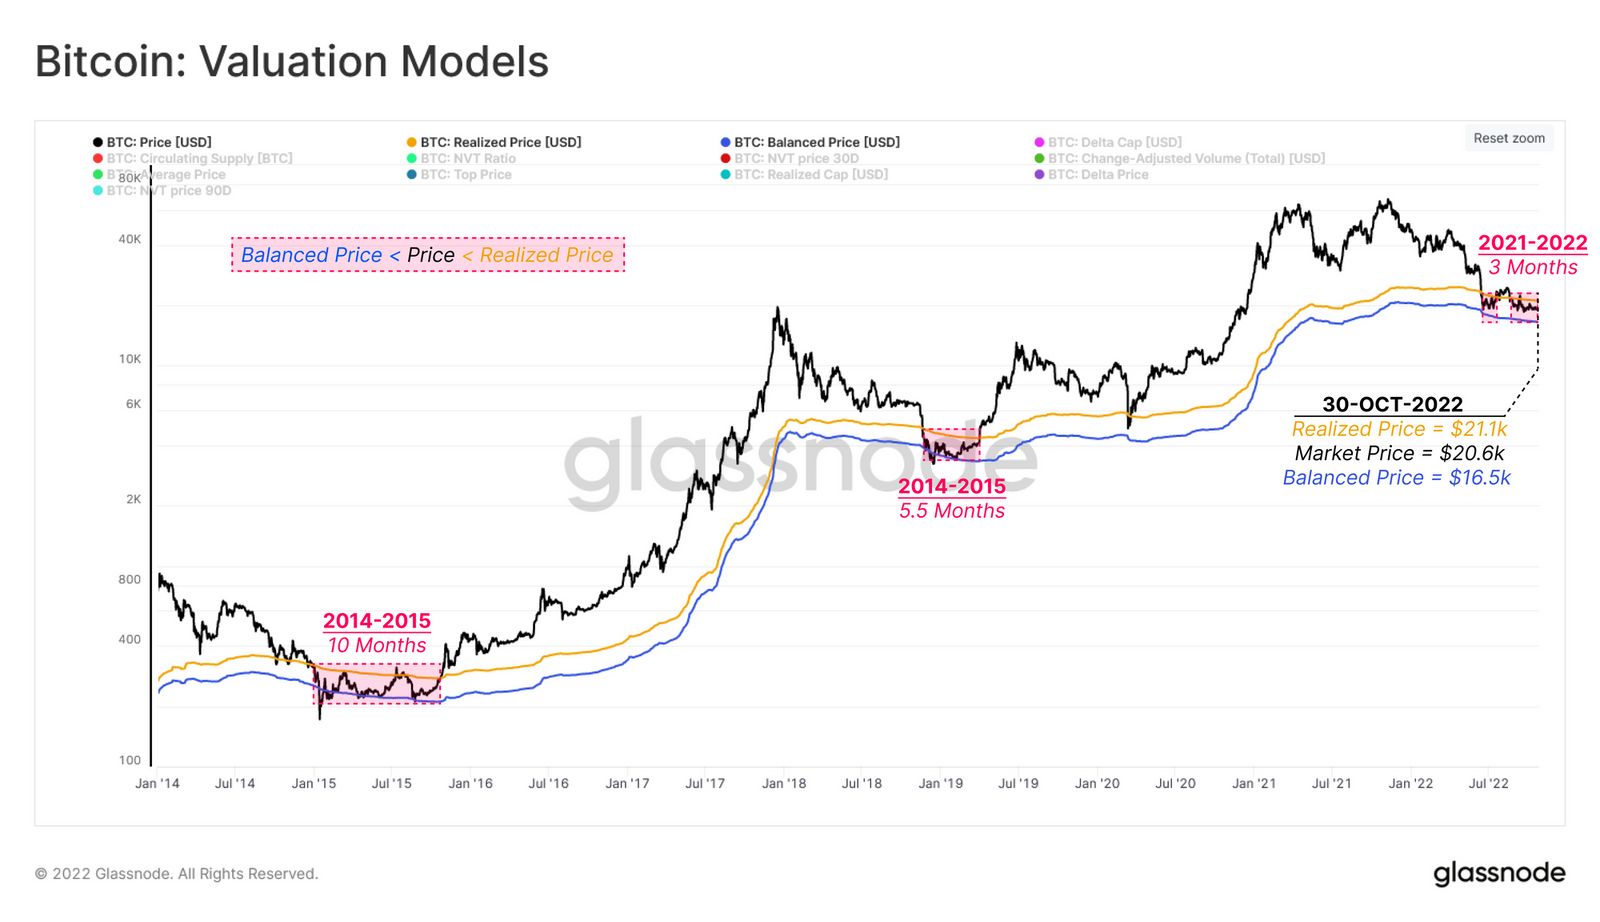 Bitcoin valuation models